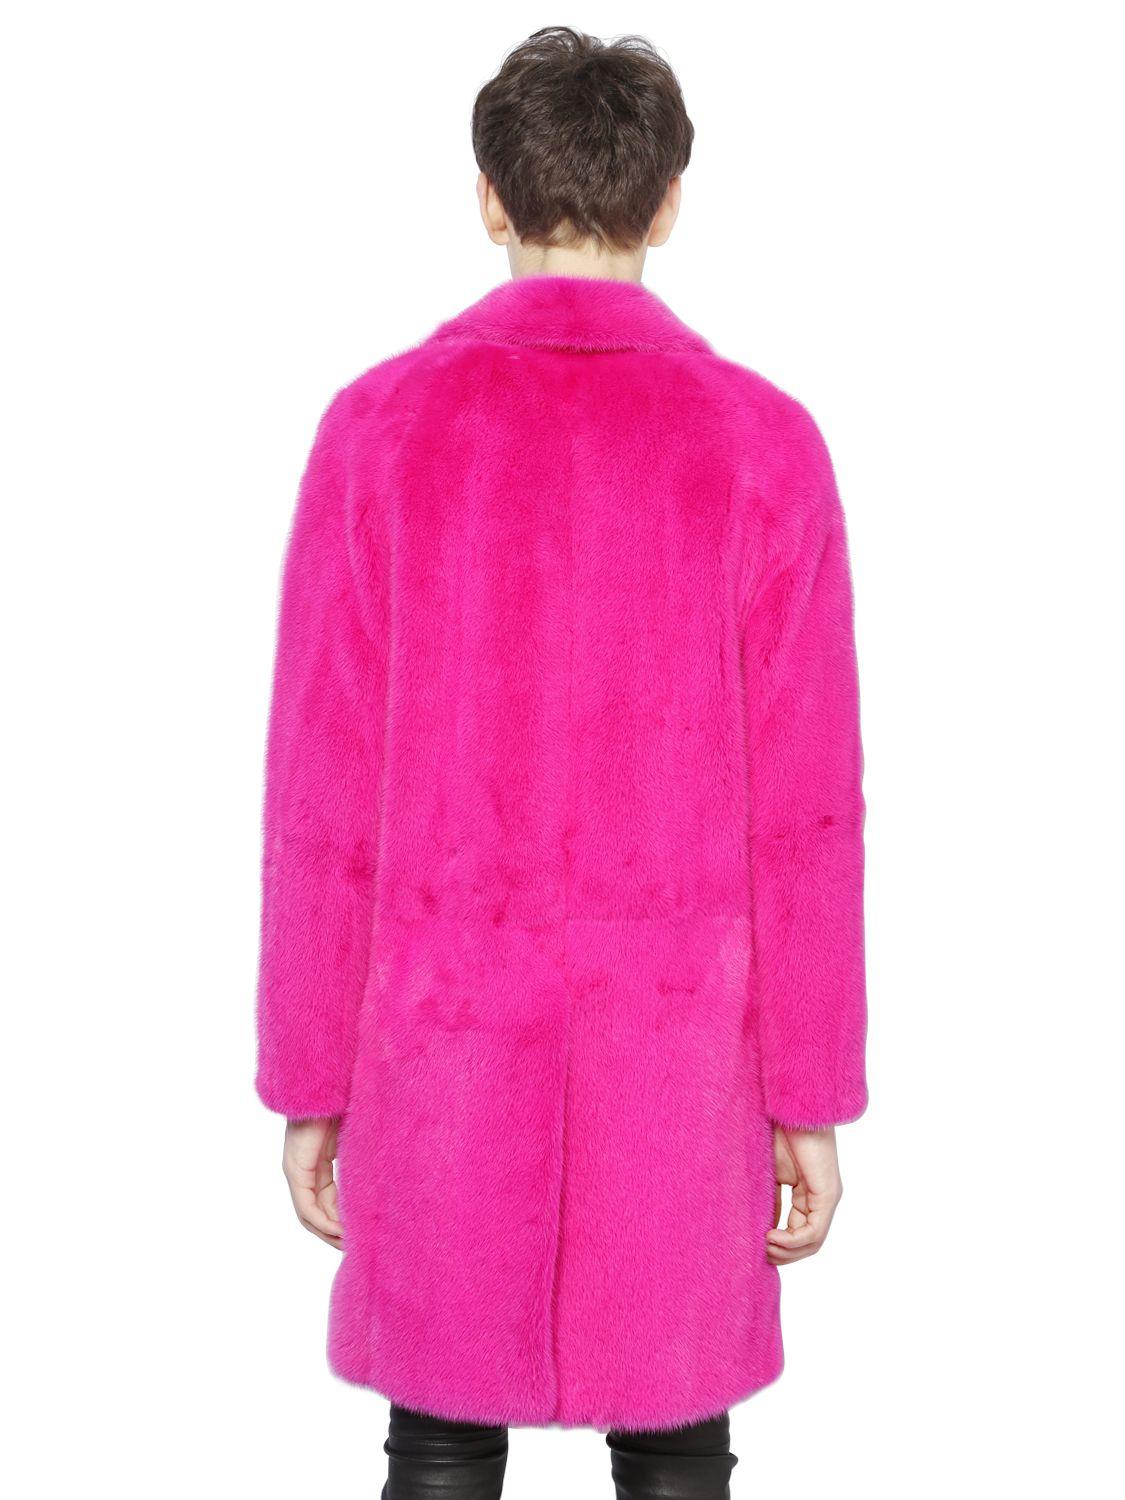 Saint Laurent Mink Fur Coat in Fuchsia (Pink) for Men - Lyst